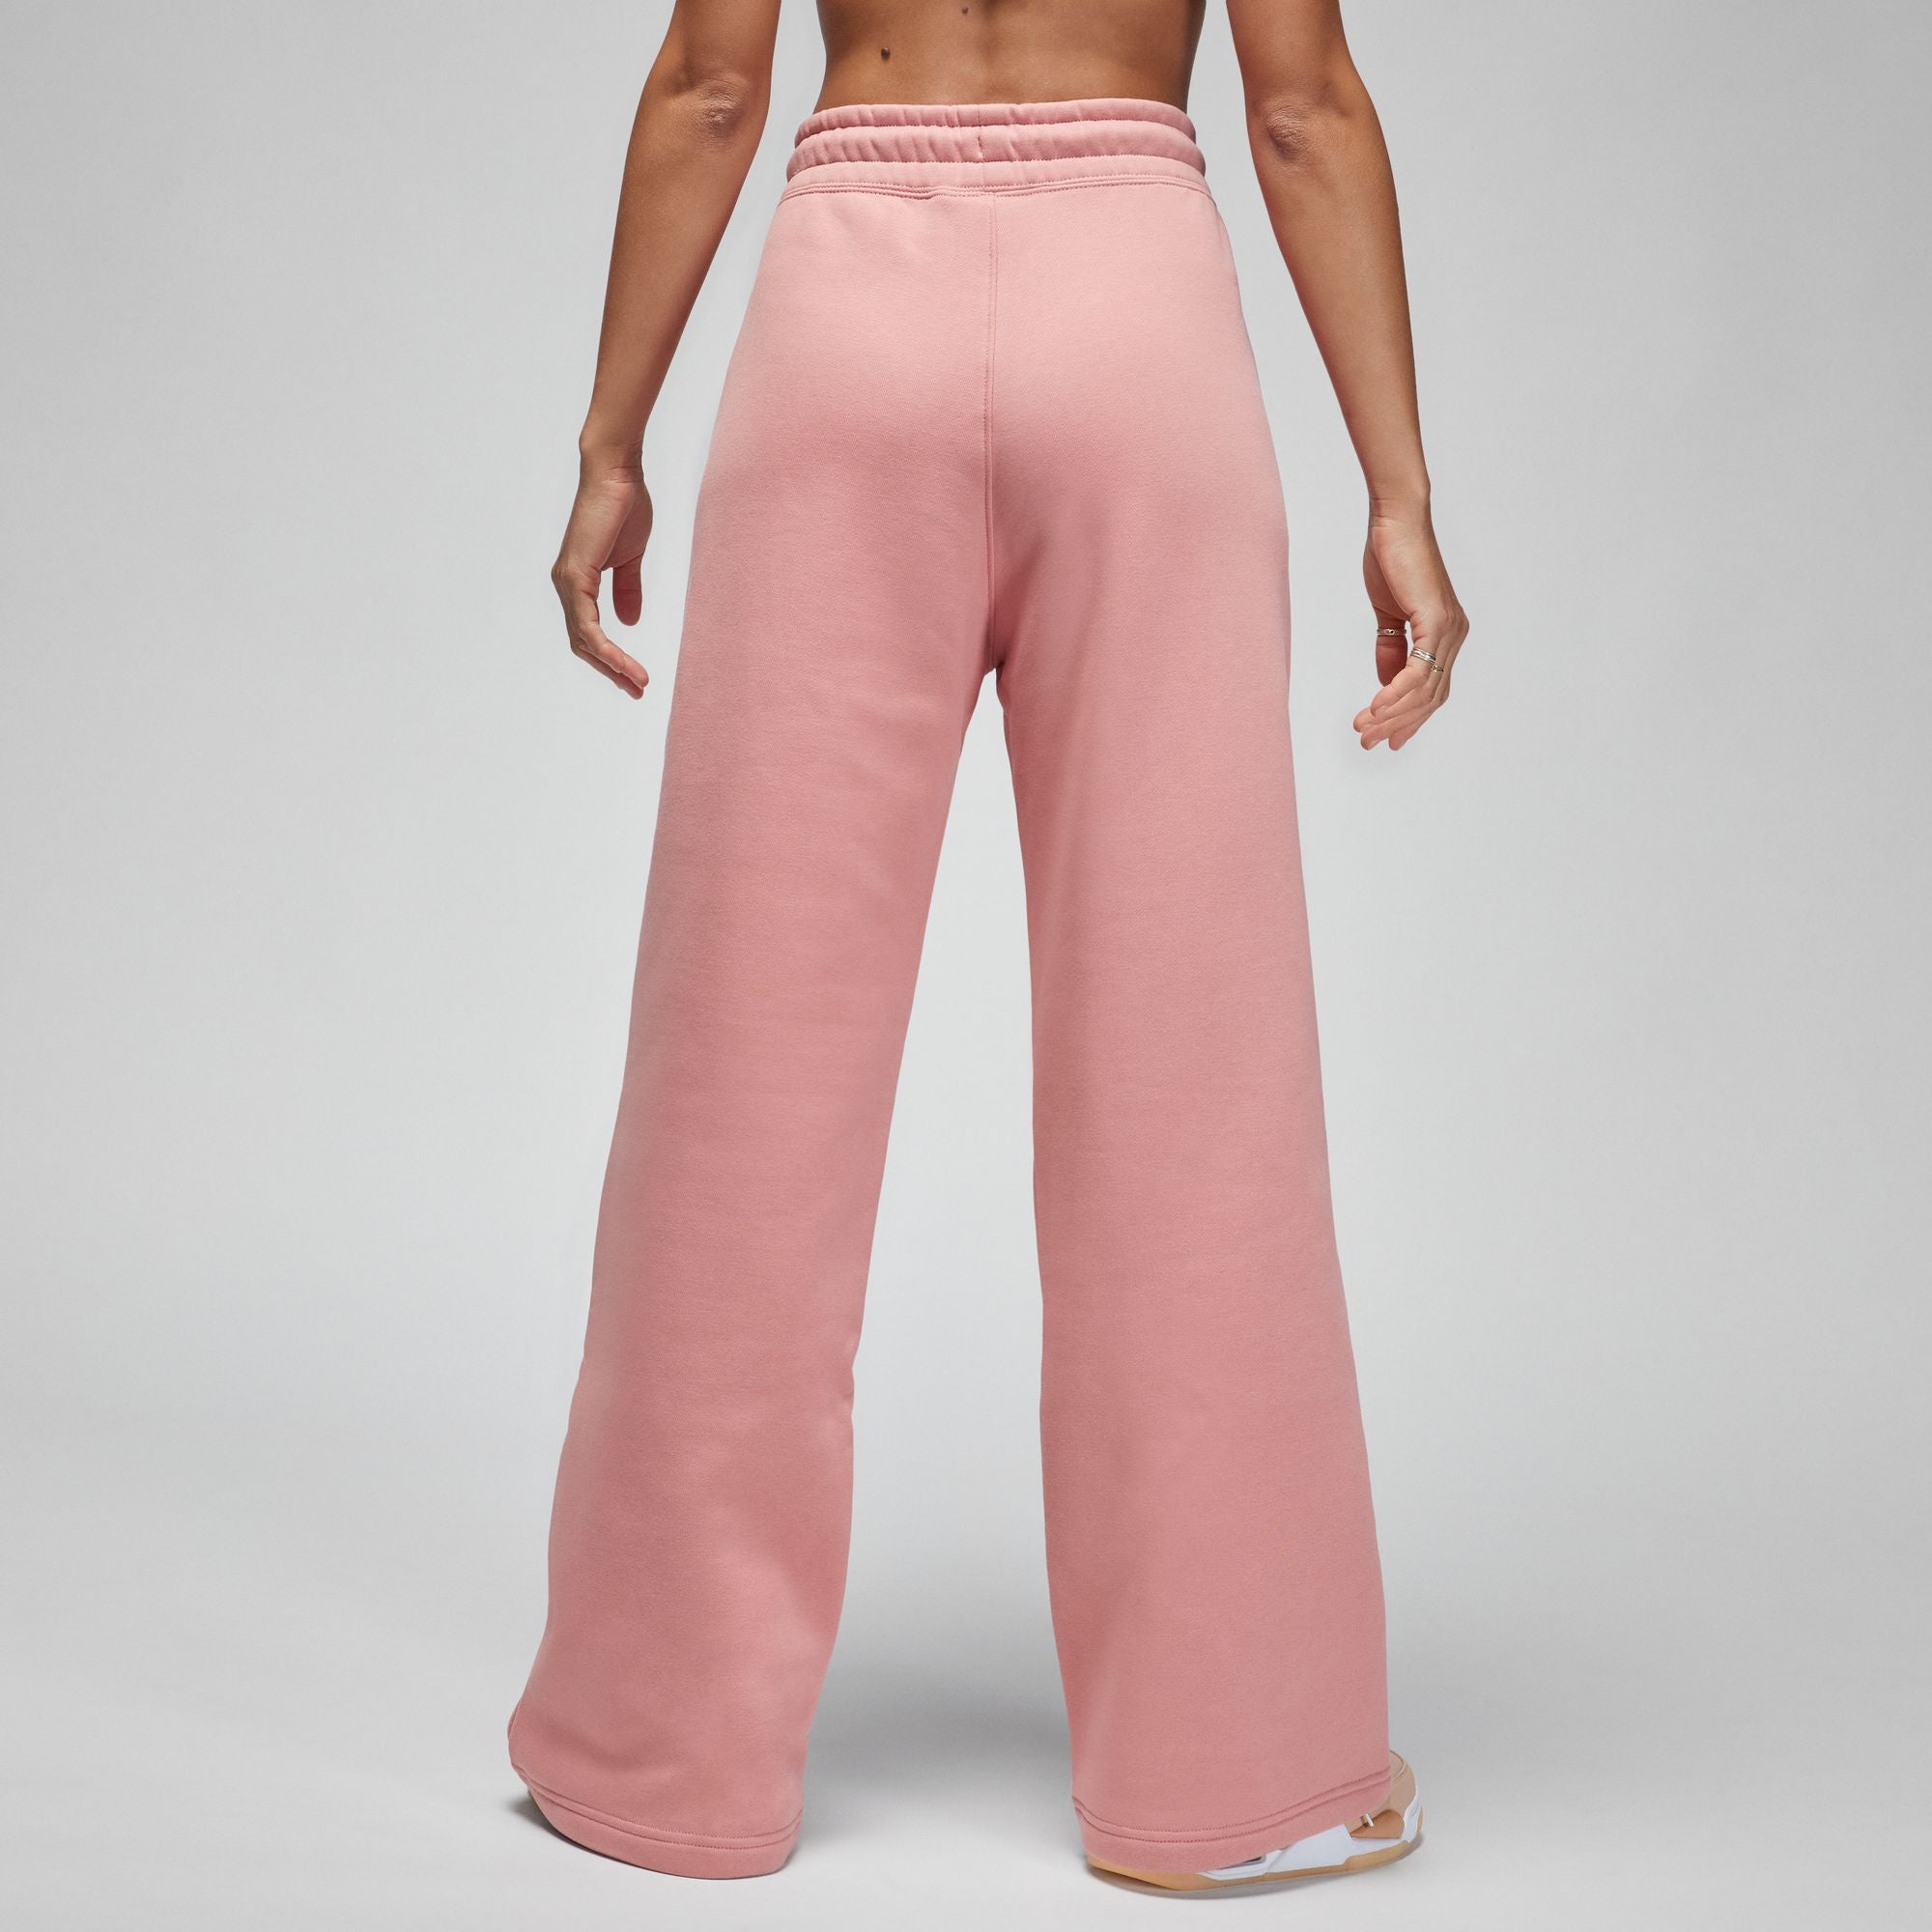 Jordan Flight Women's Fleece Pants Plus Size 2X Green : : Fashion